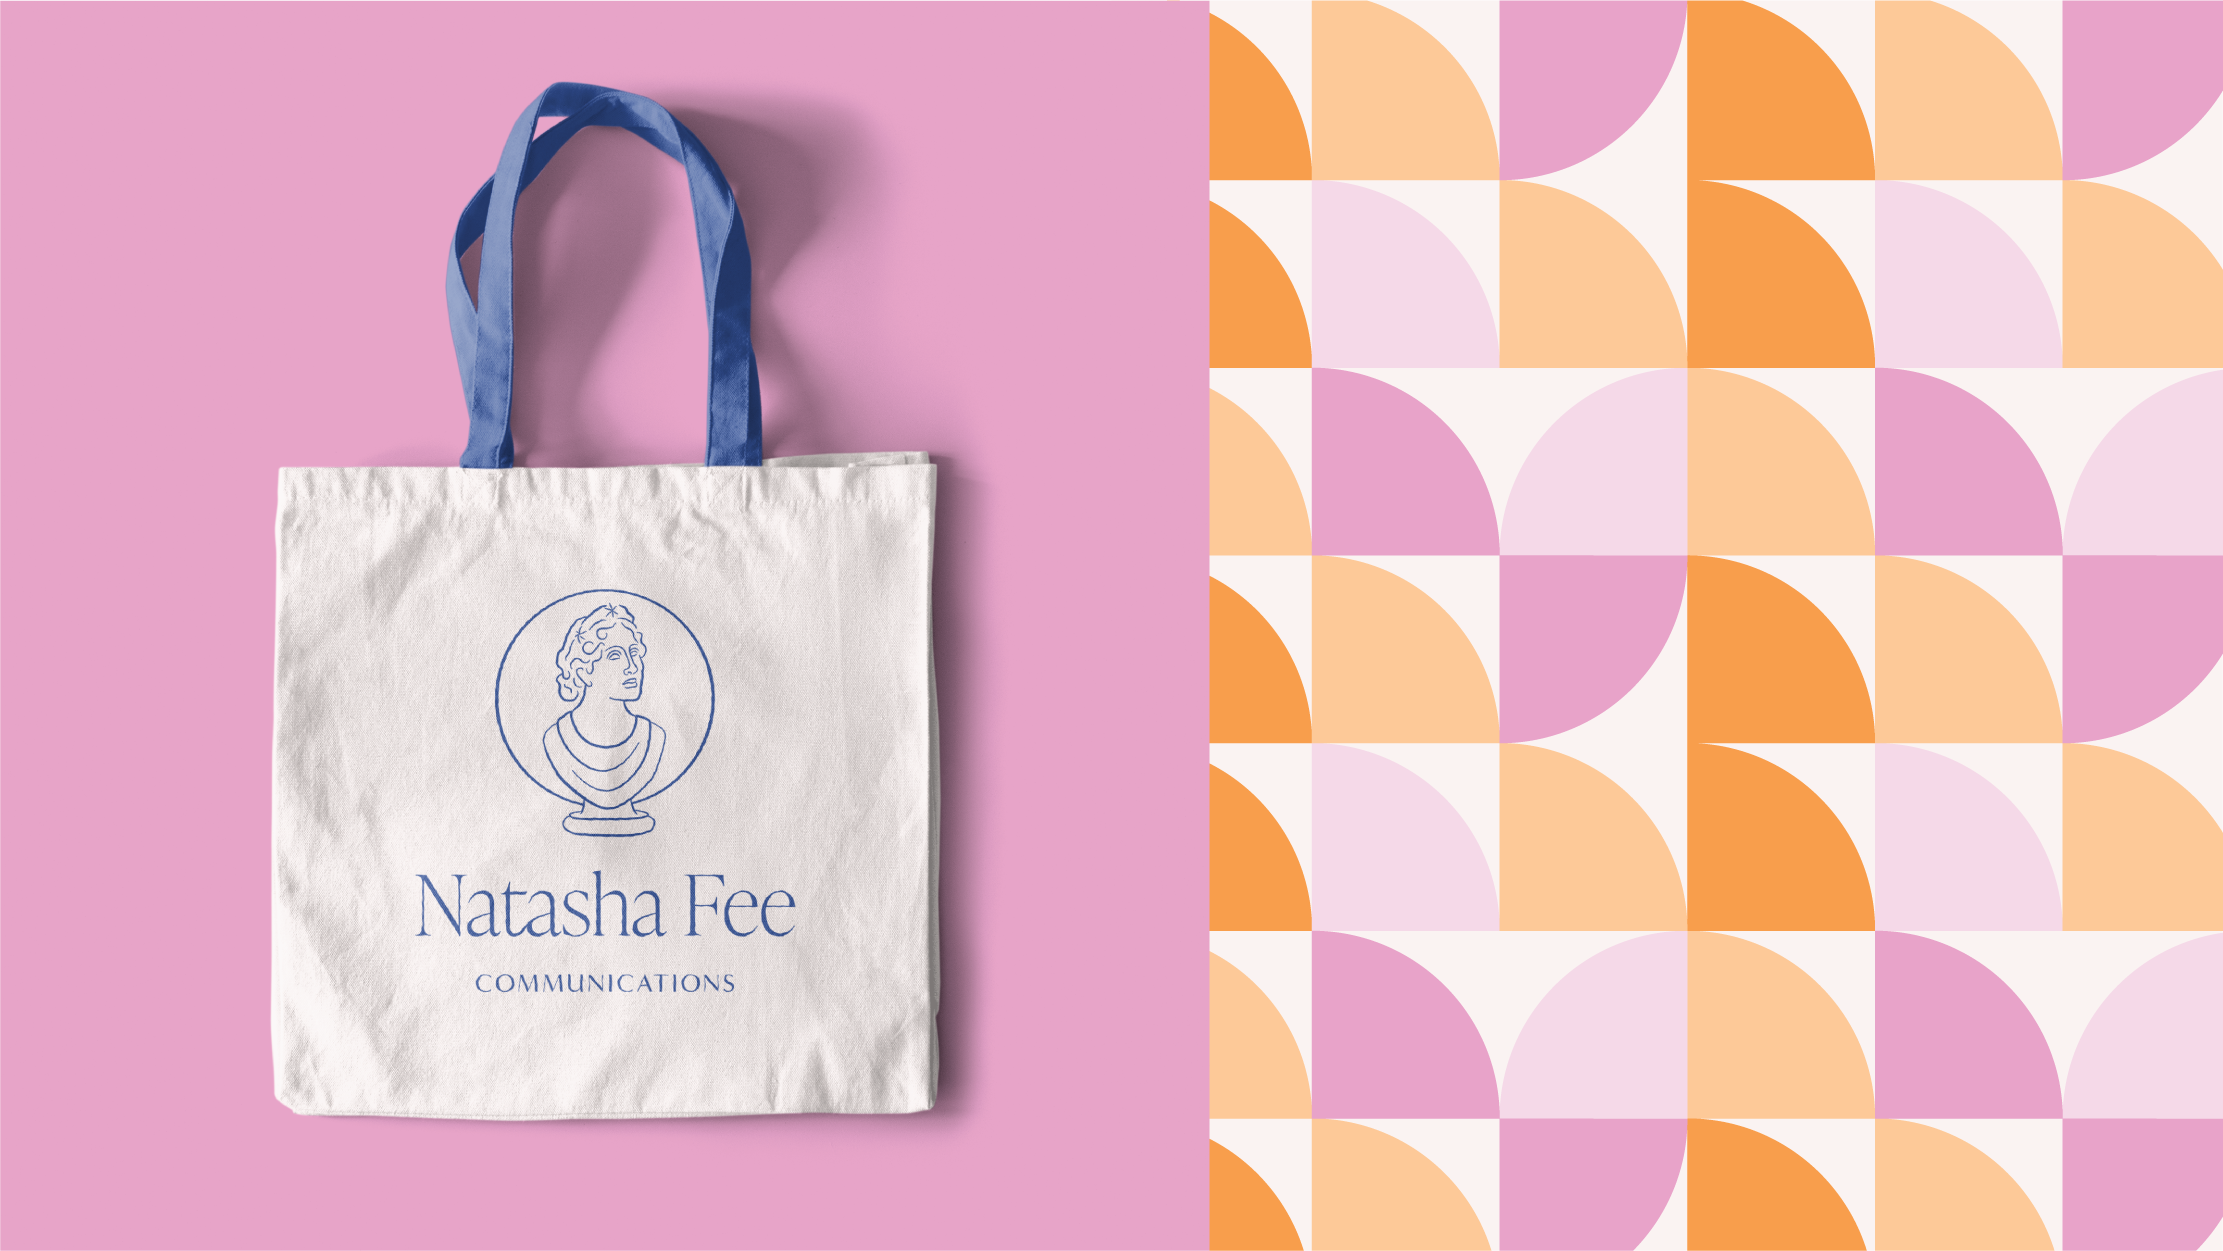 Natasha Fee Communications Brand Design – Tote Bag and Pattern